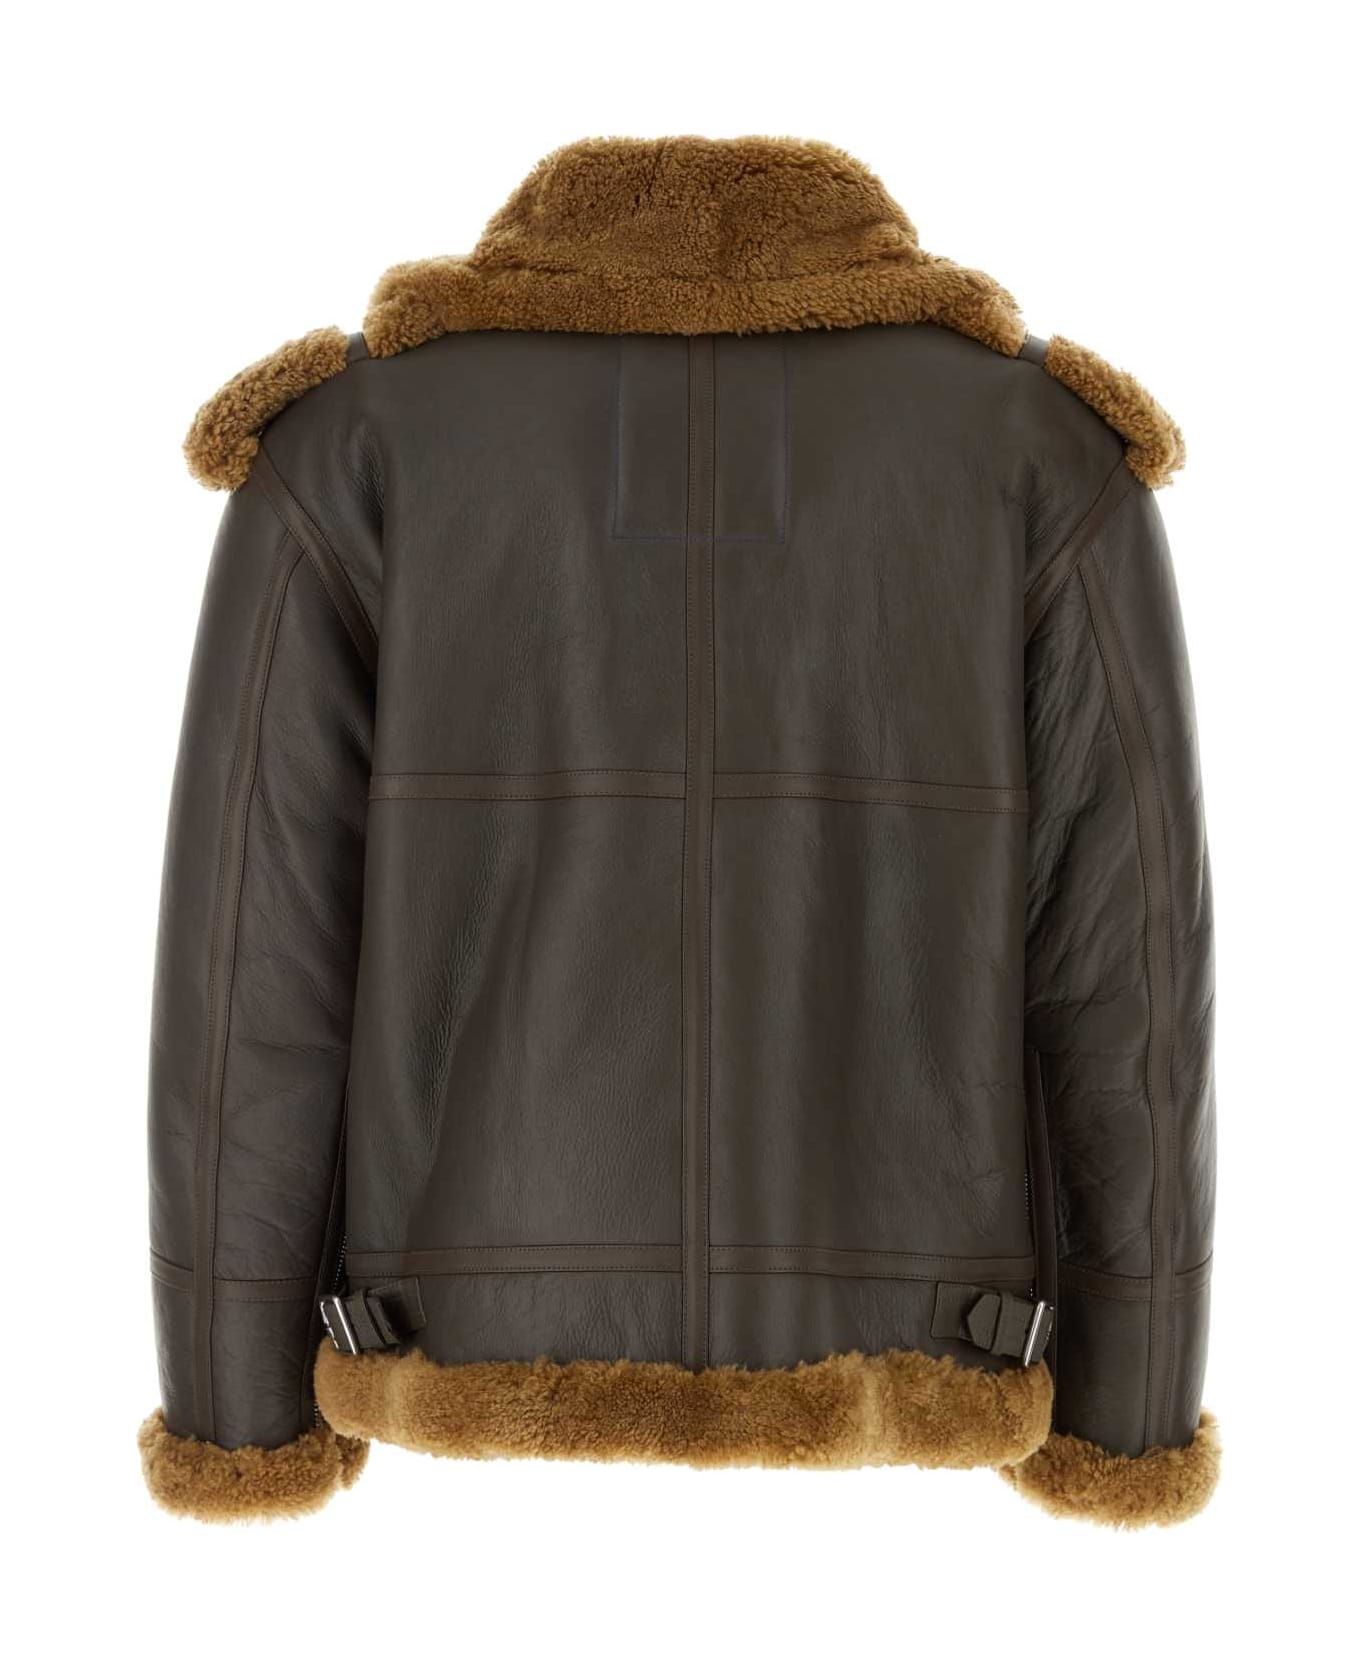 Burberry Dark Brown Leather Jacket - OTTER